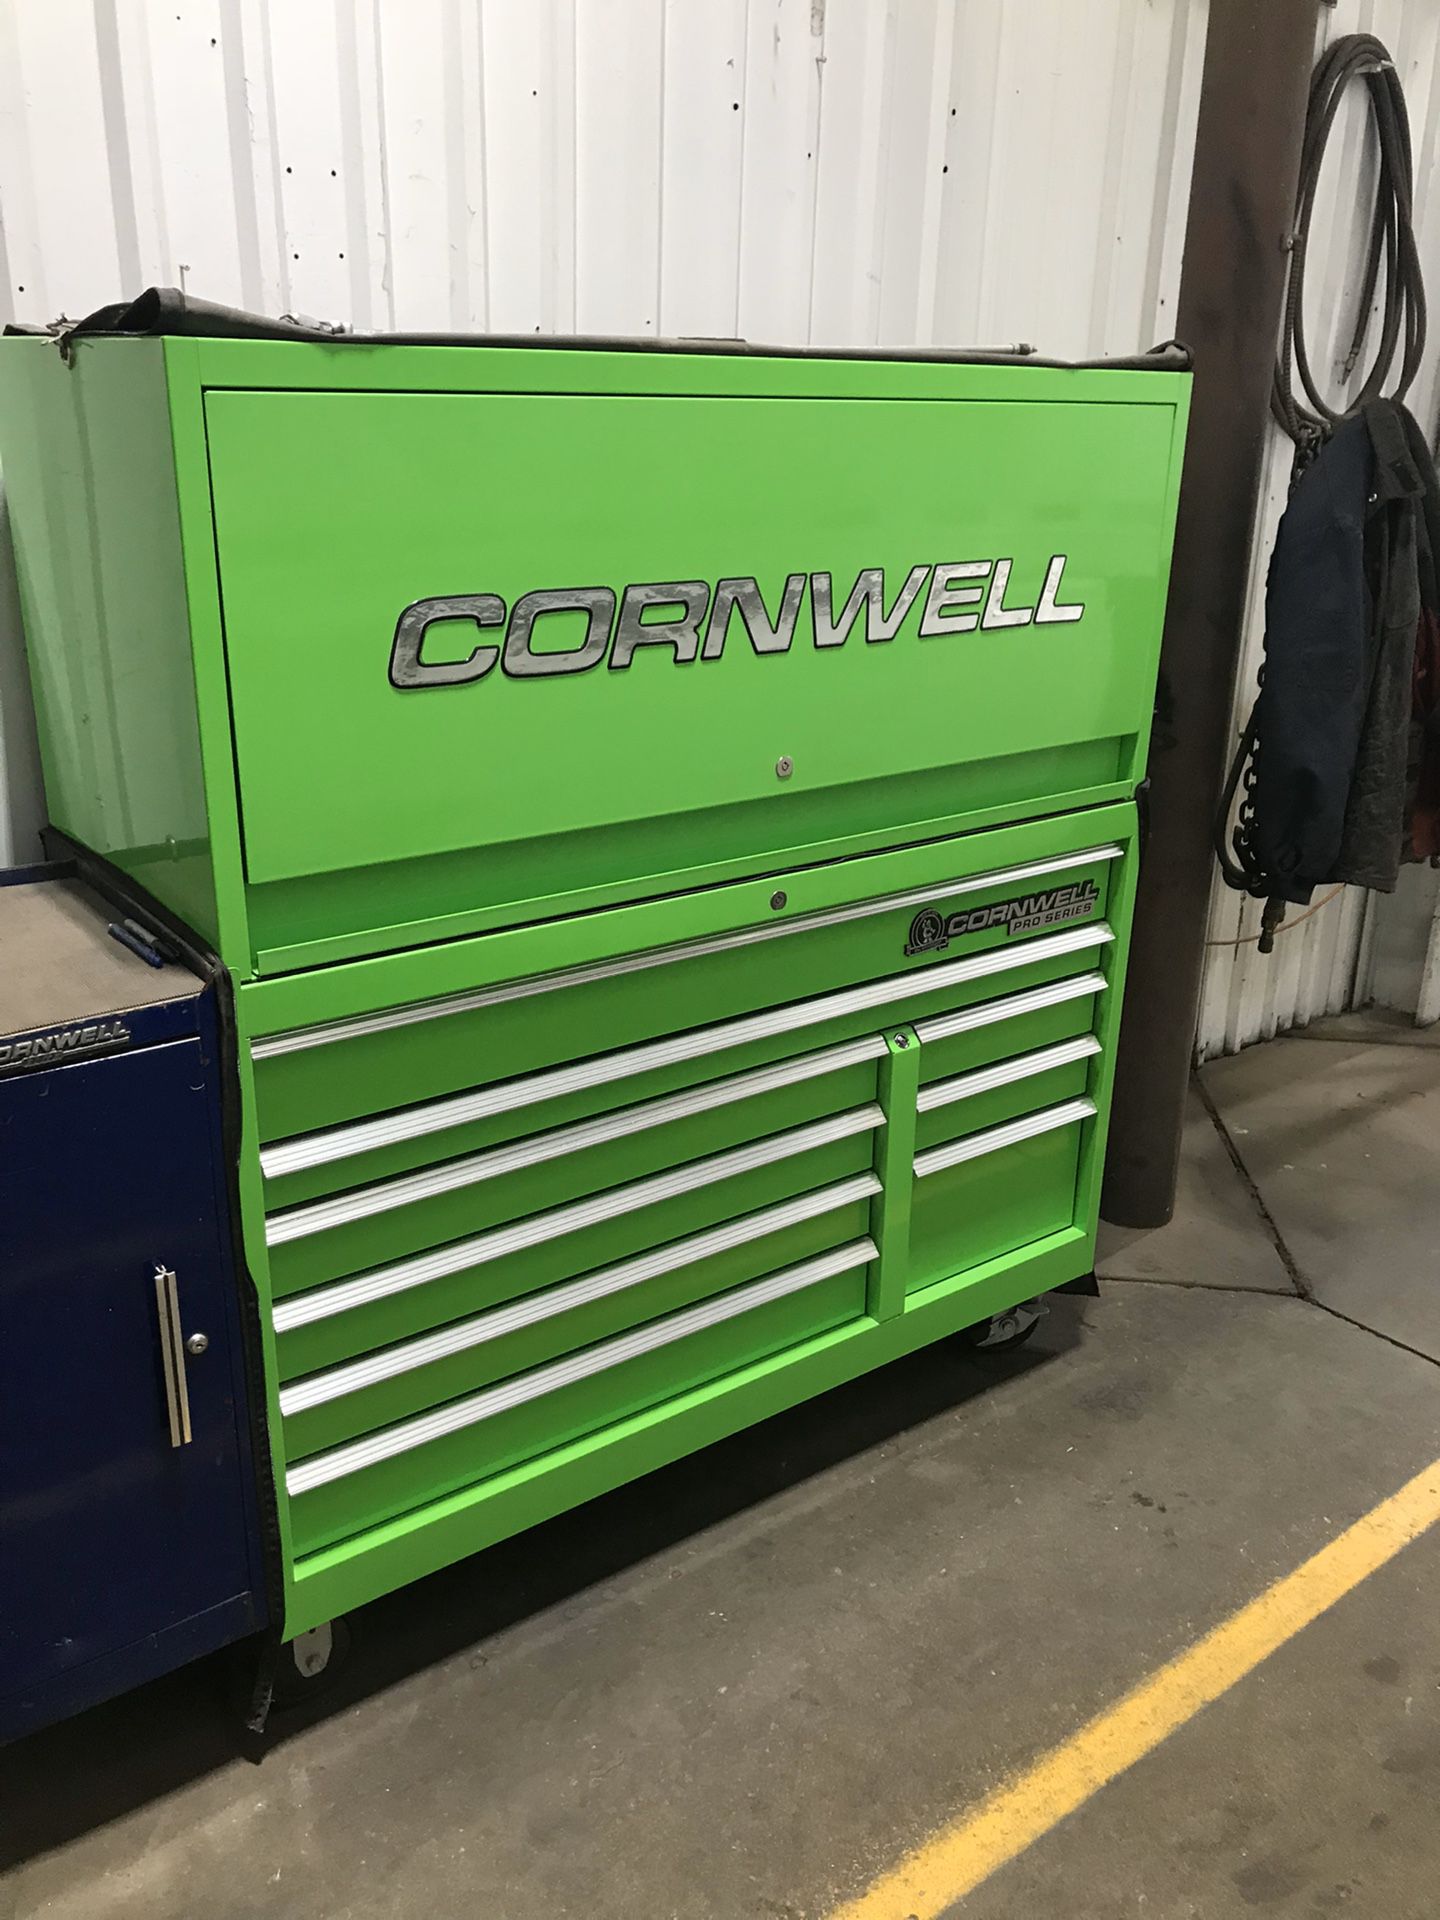 Cornwell tool box with hutch.